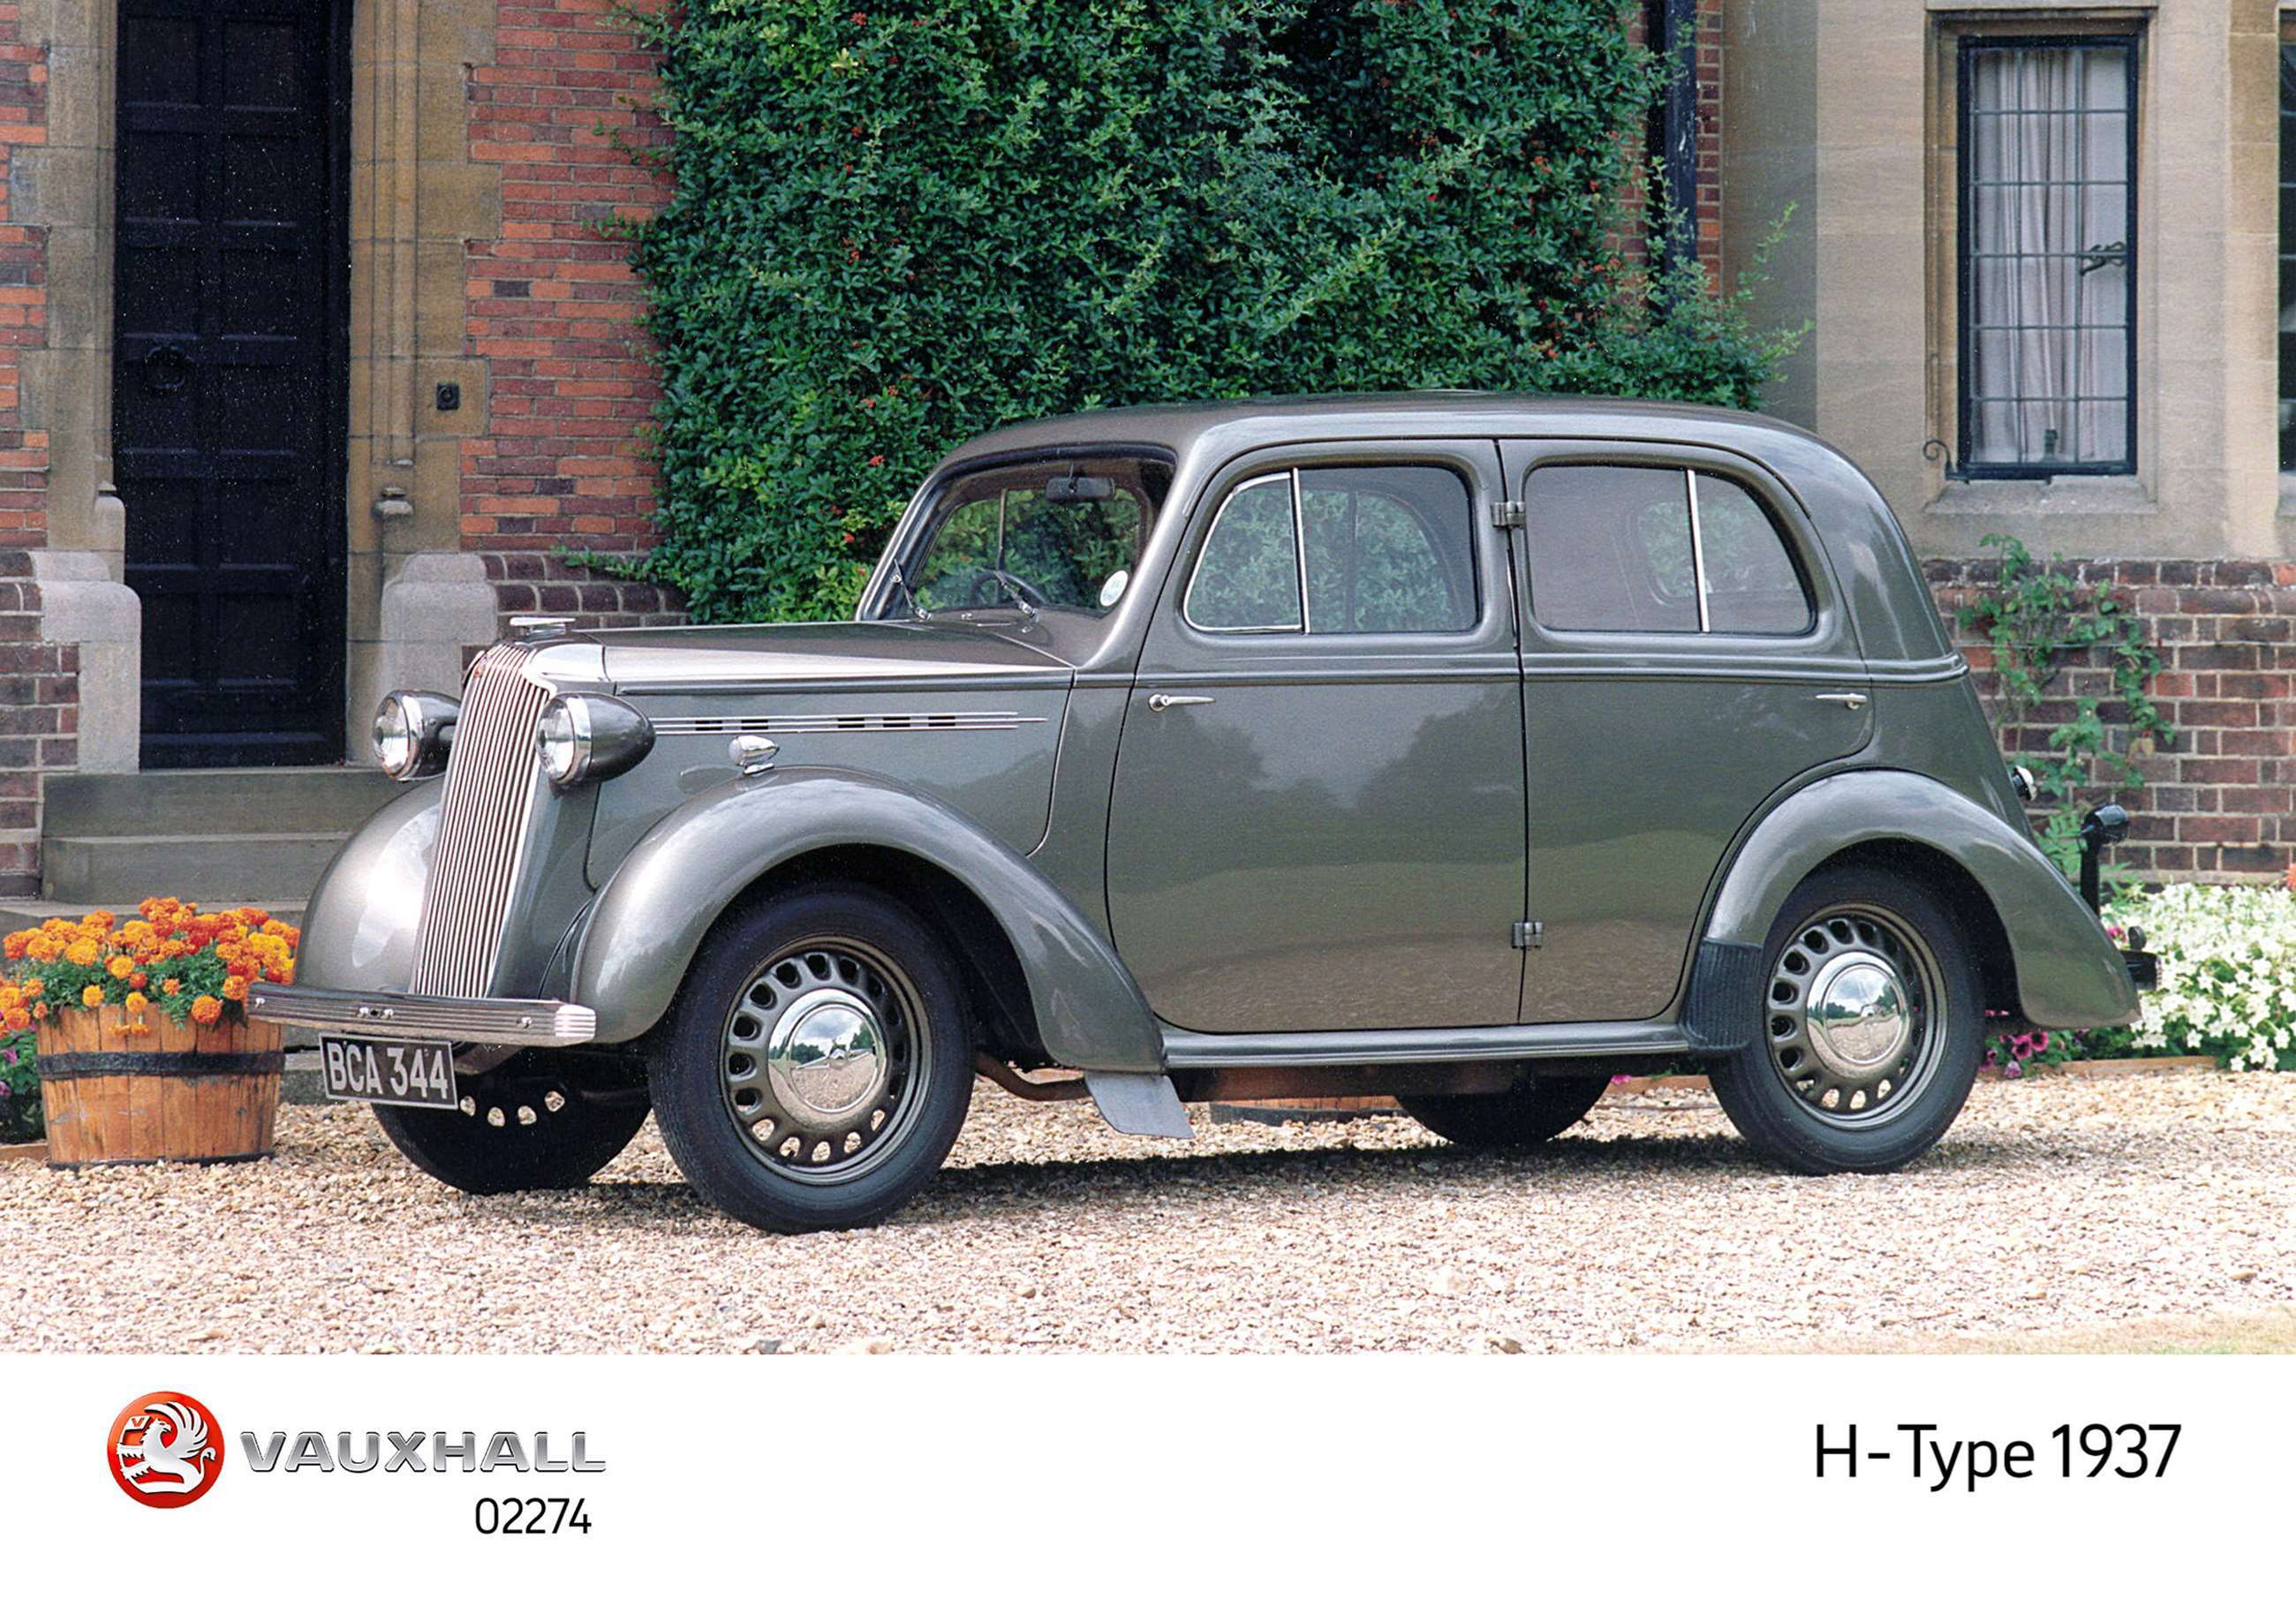 vauxhall-h-type-1937-goodwood-17042019.jpg